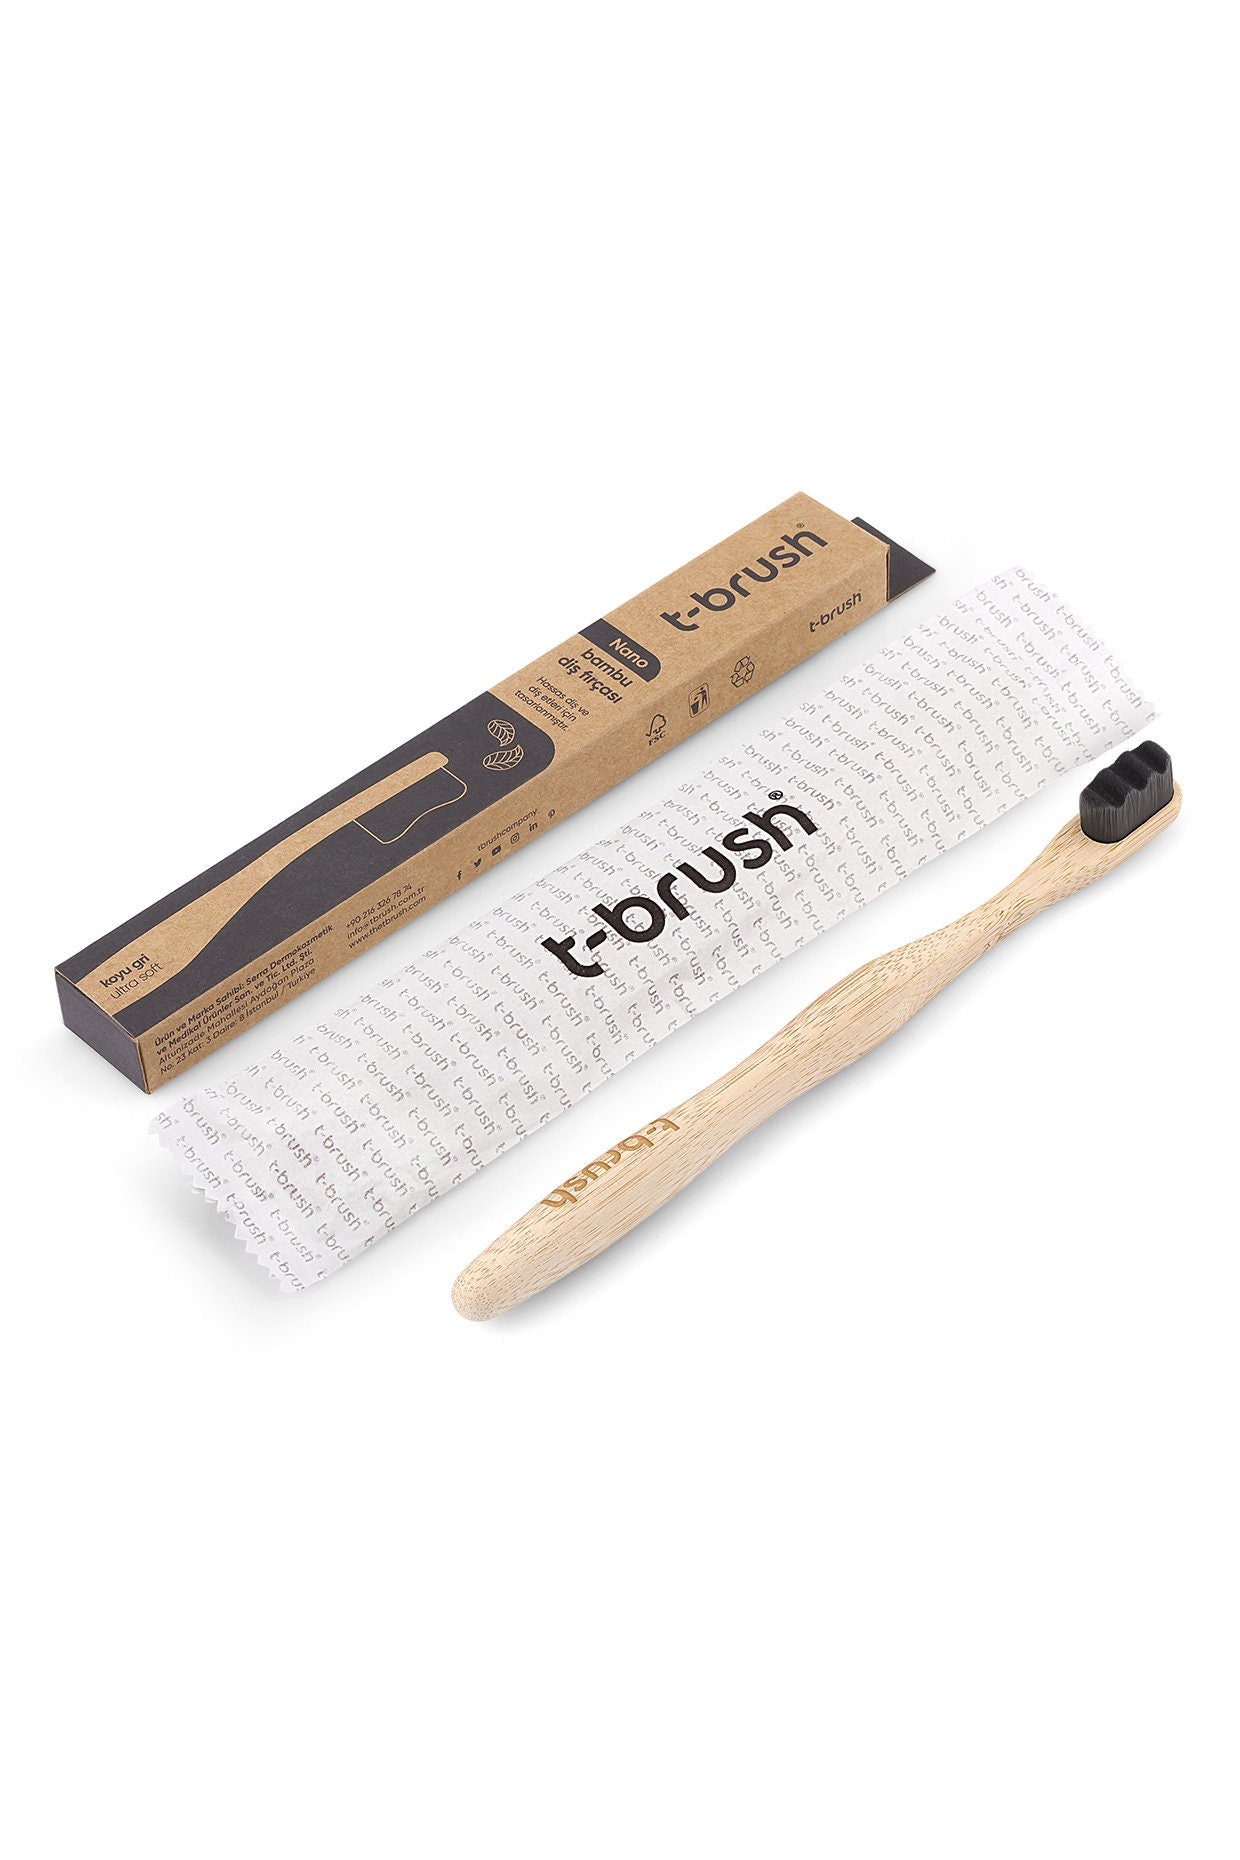 T-Brush Nono Bamboo Toothbrush - White - Dark Grey Colour - Dupont Bristles - Sensitive Teeth -Natural Toothbrush - Eco Friendly - Everyday